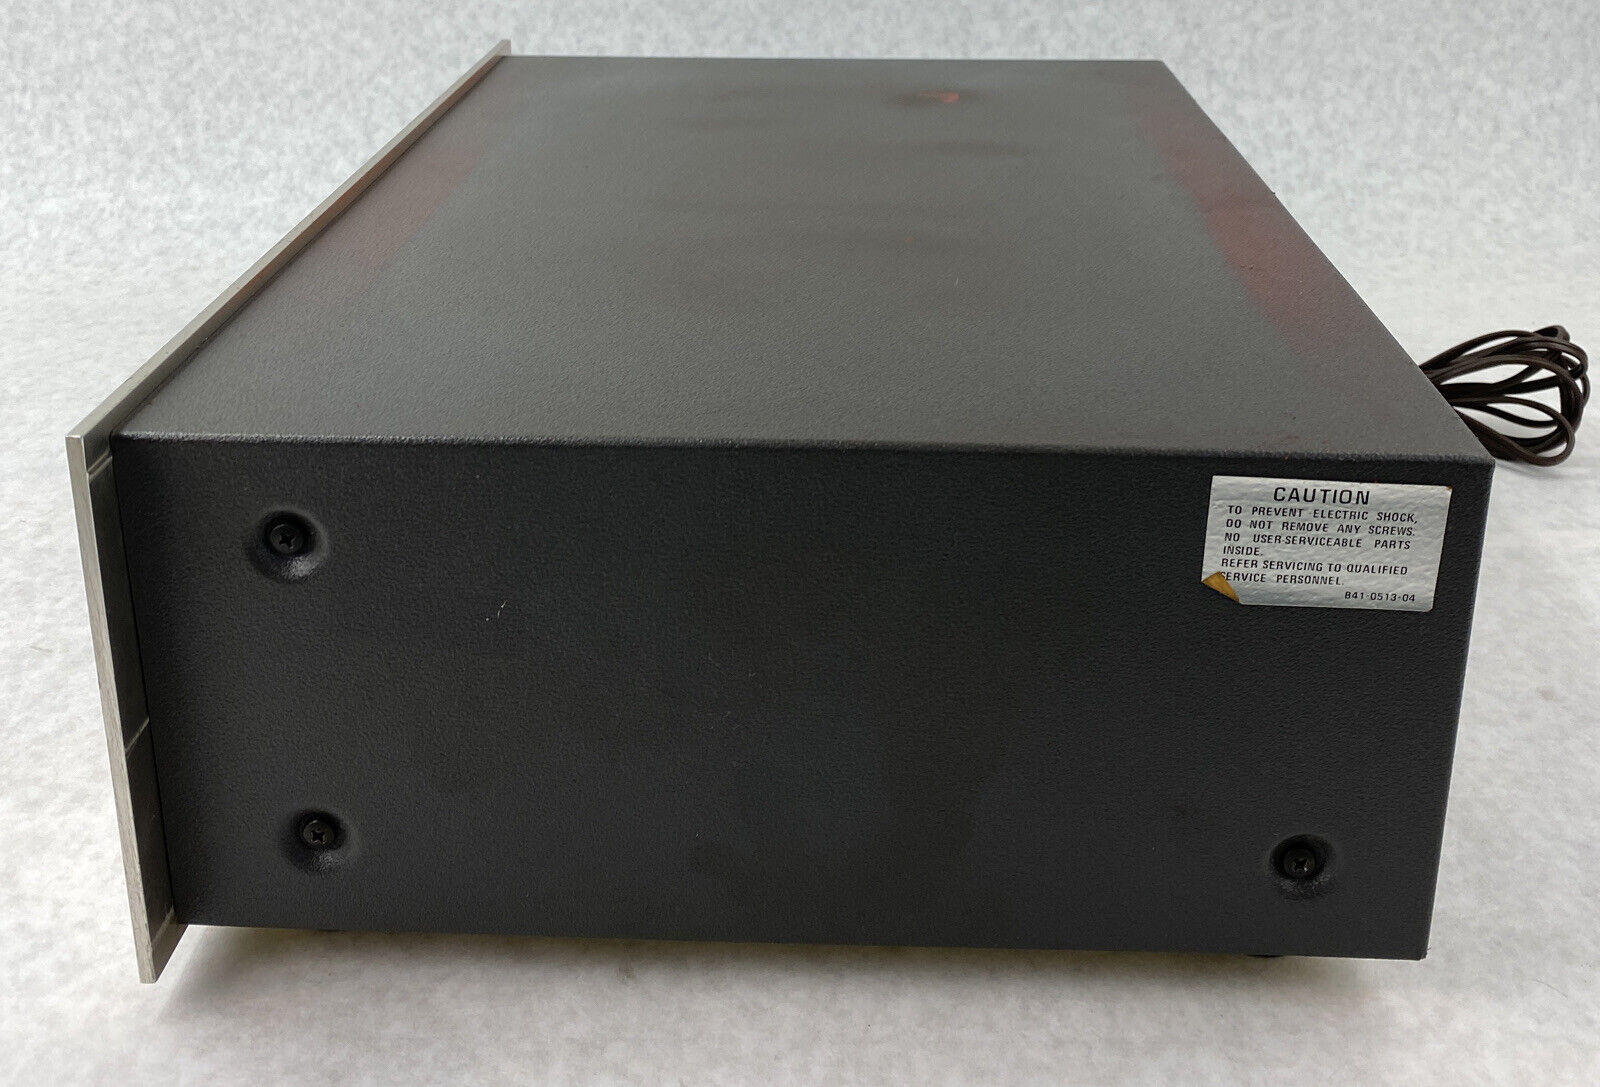 Kenwood KX-620 Stereo Cassette Deck NEEDS REPAIR